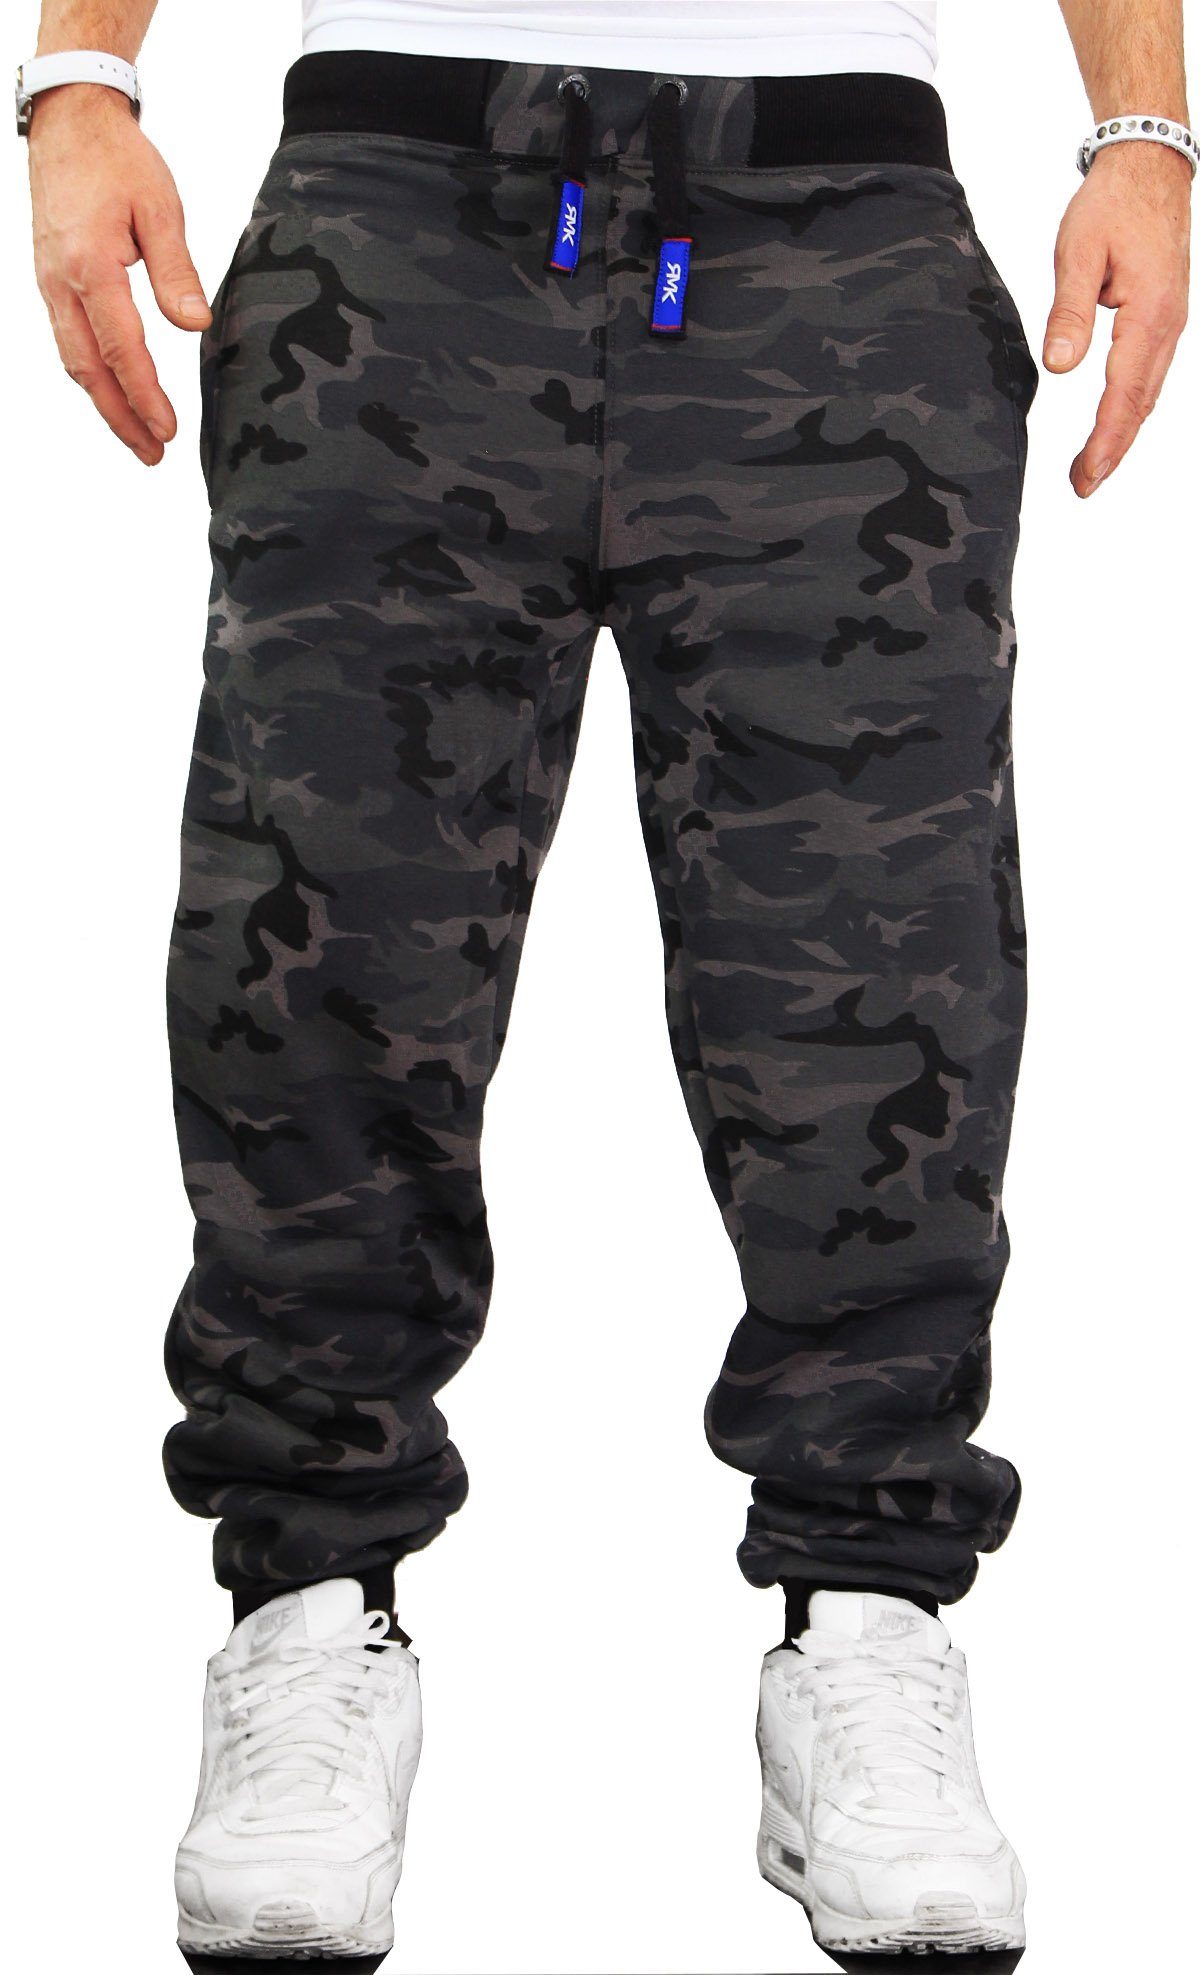 RMK Jogginghose »Herren Trainingshose Fitnesshose Sporthose Sweatpants  Camouflage und Unifarben H.02« online kaufen | OTTO